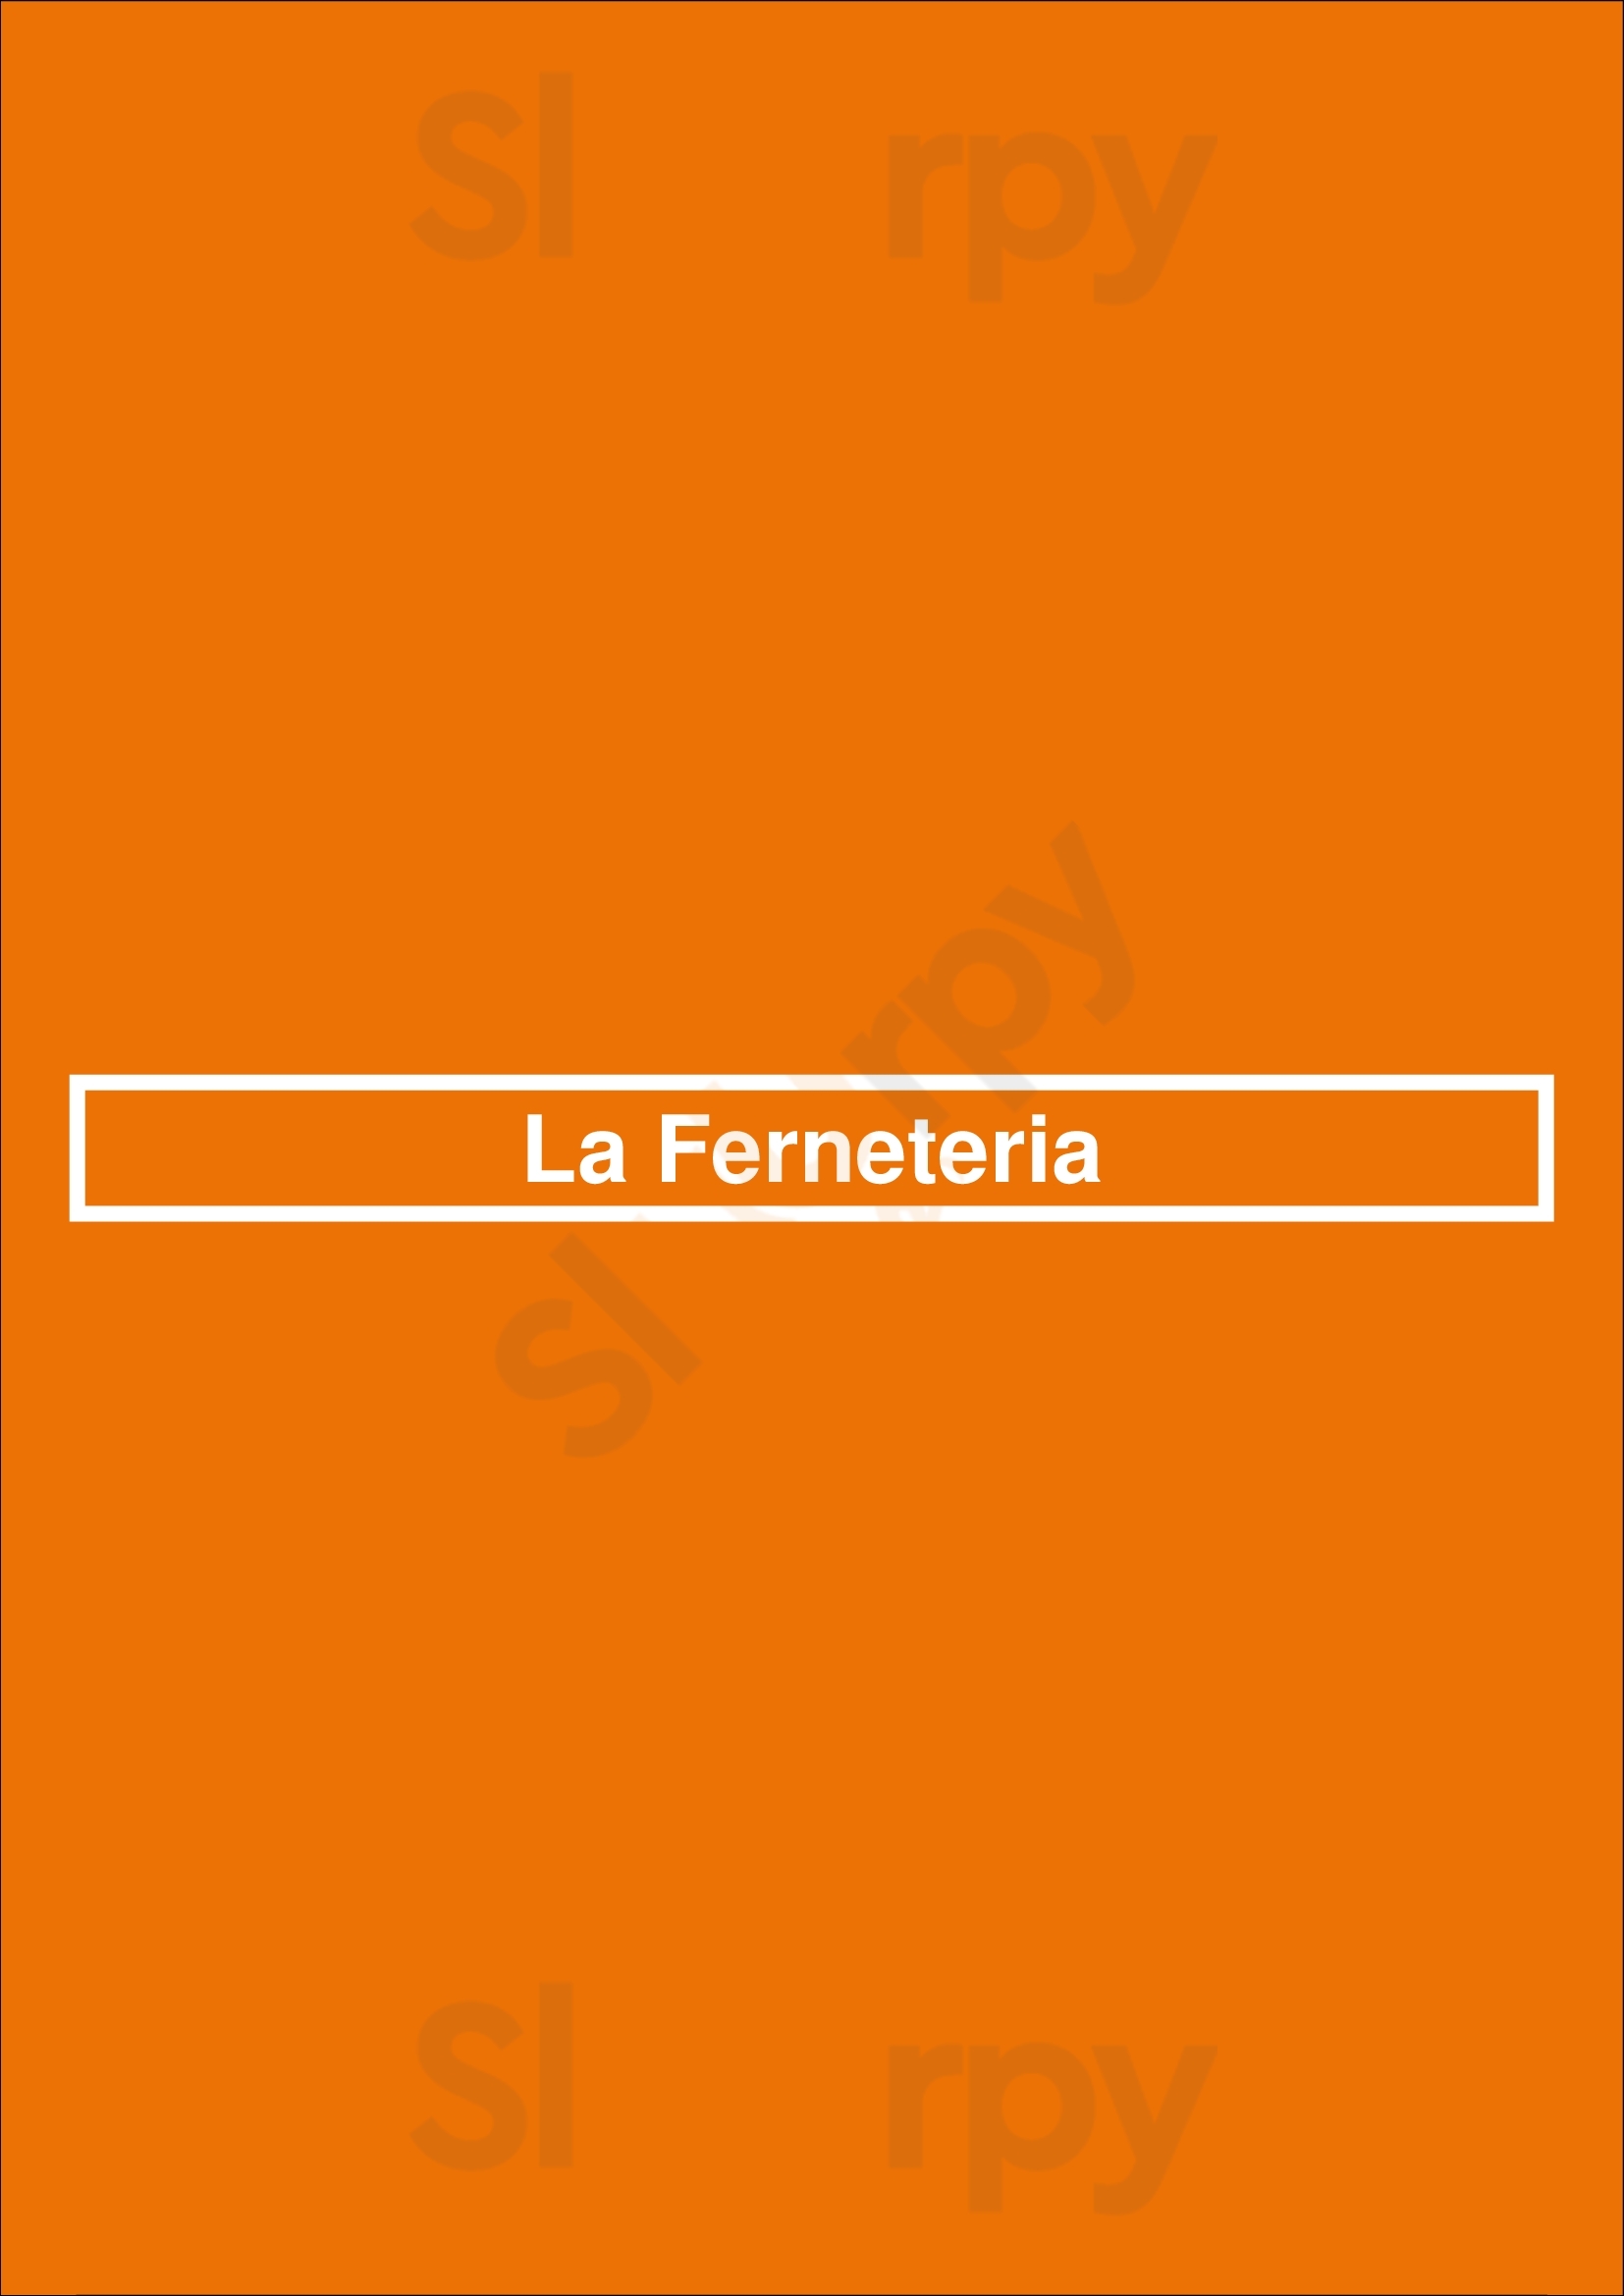 La Ferneteria Buenos Aires Menu - 1